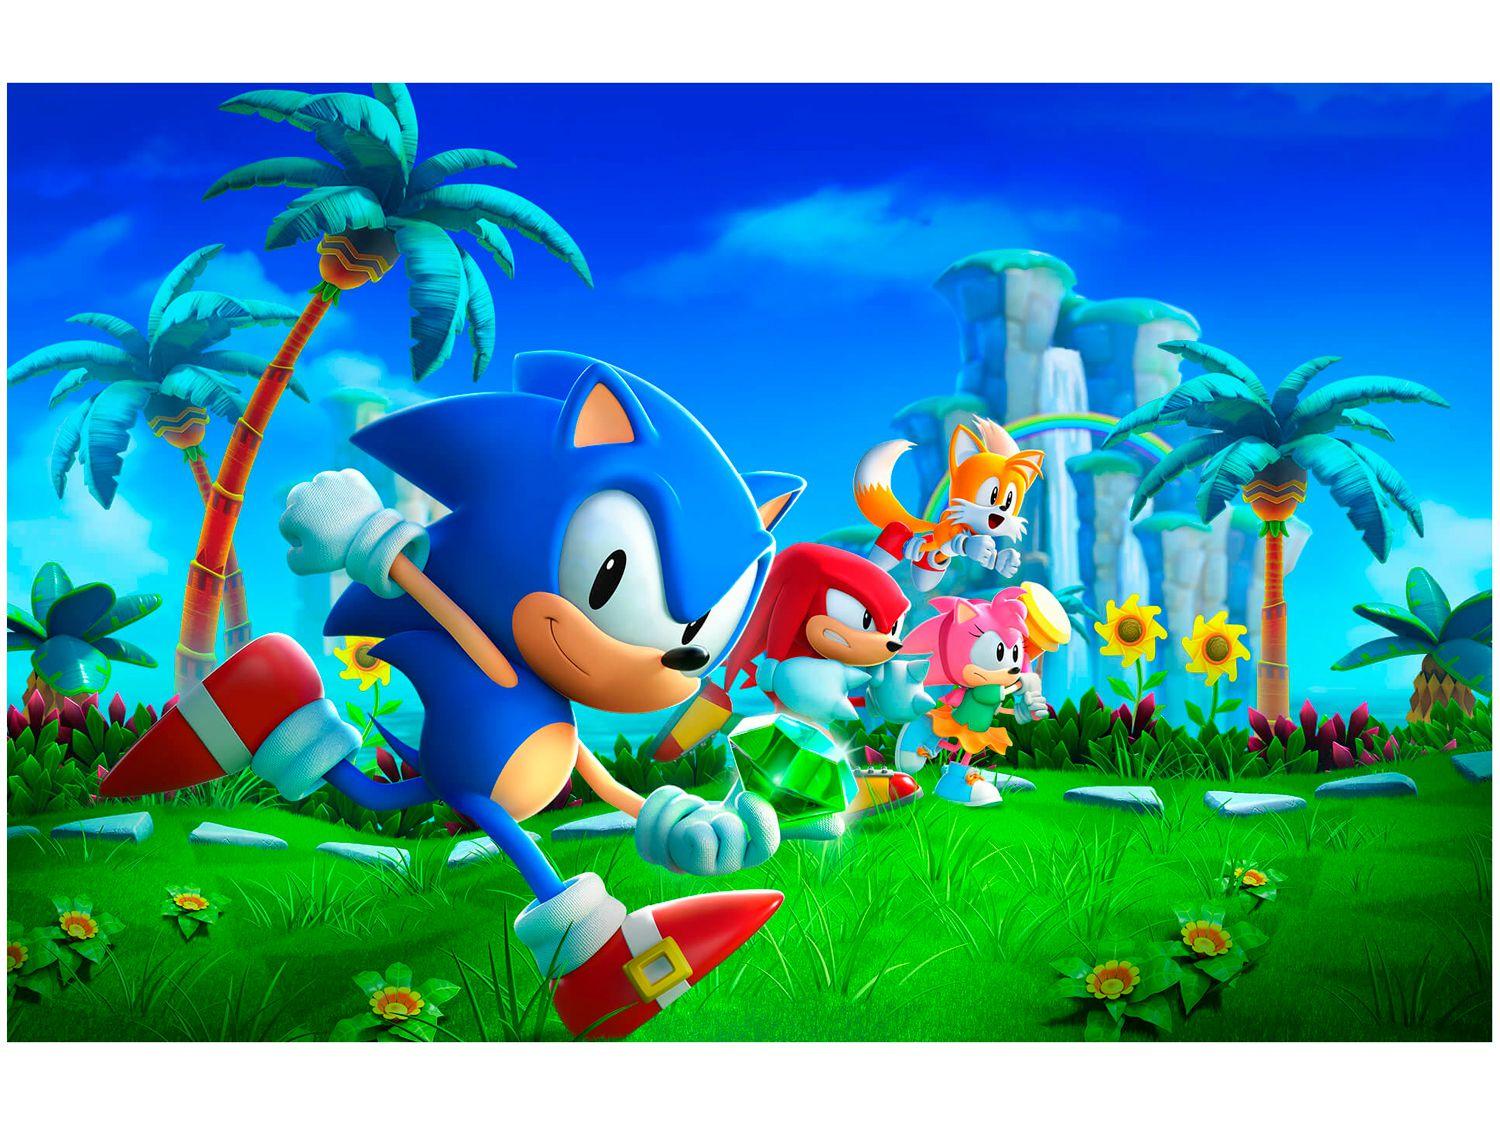 Jogo Sonic Superstars, PS4